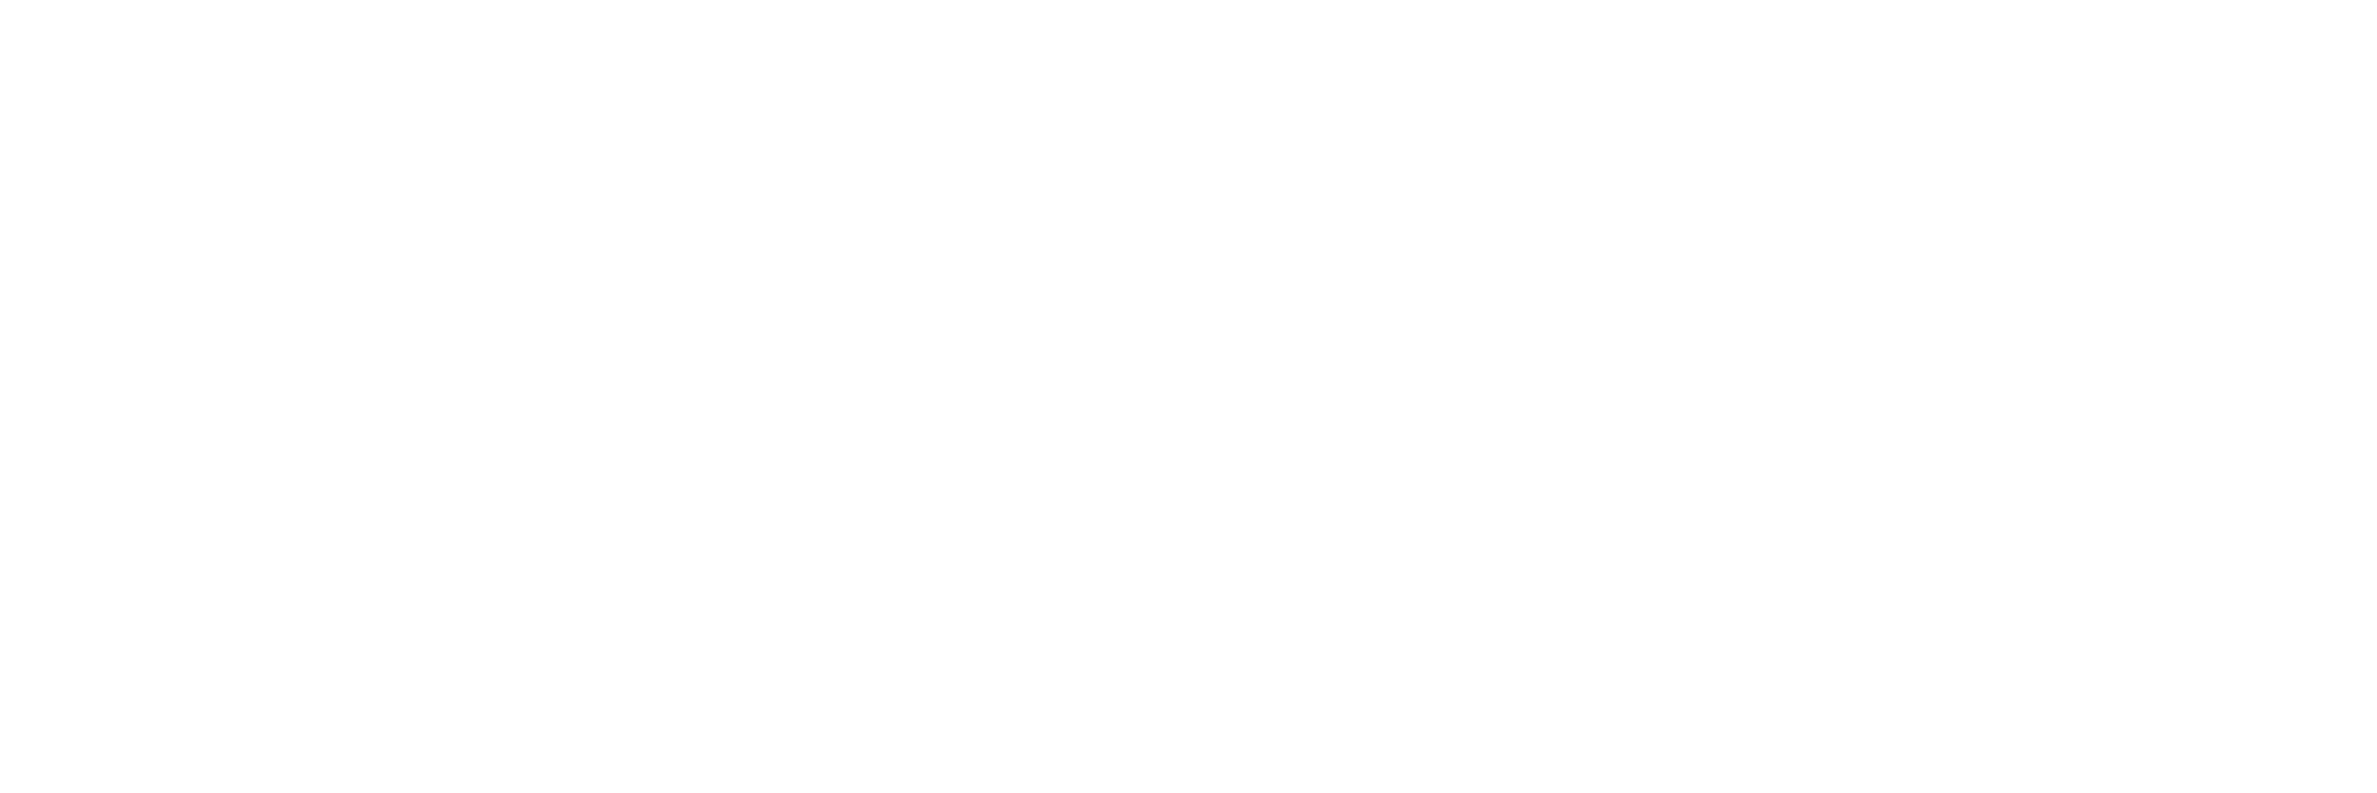 Microsoft Teams Logo - Microsoft Teams Tutorial - Strategic ...